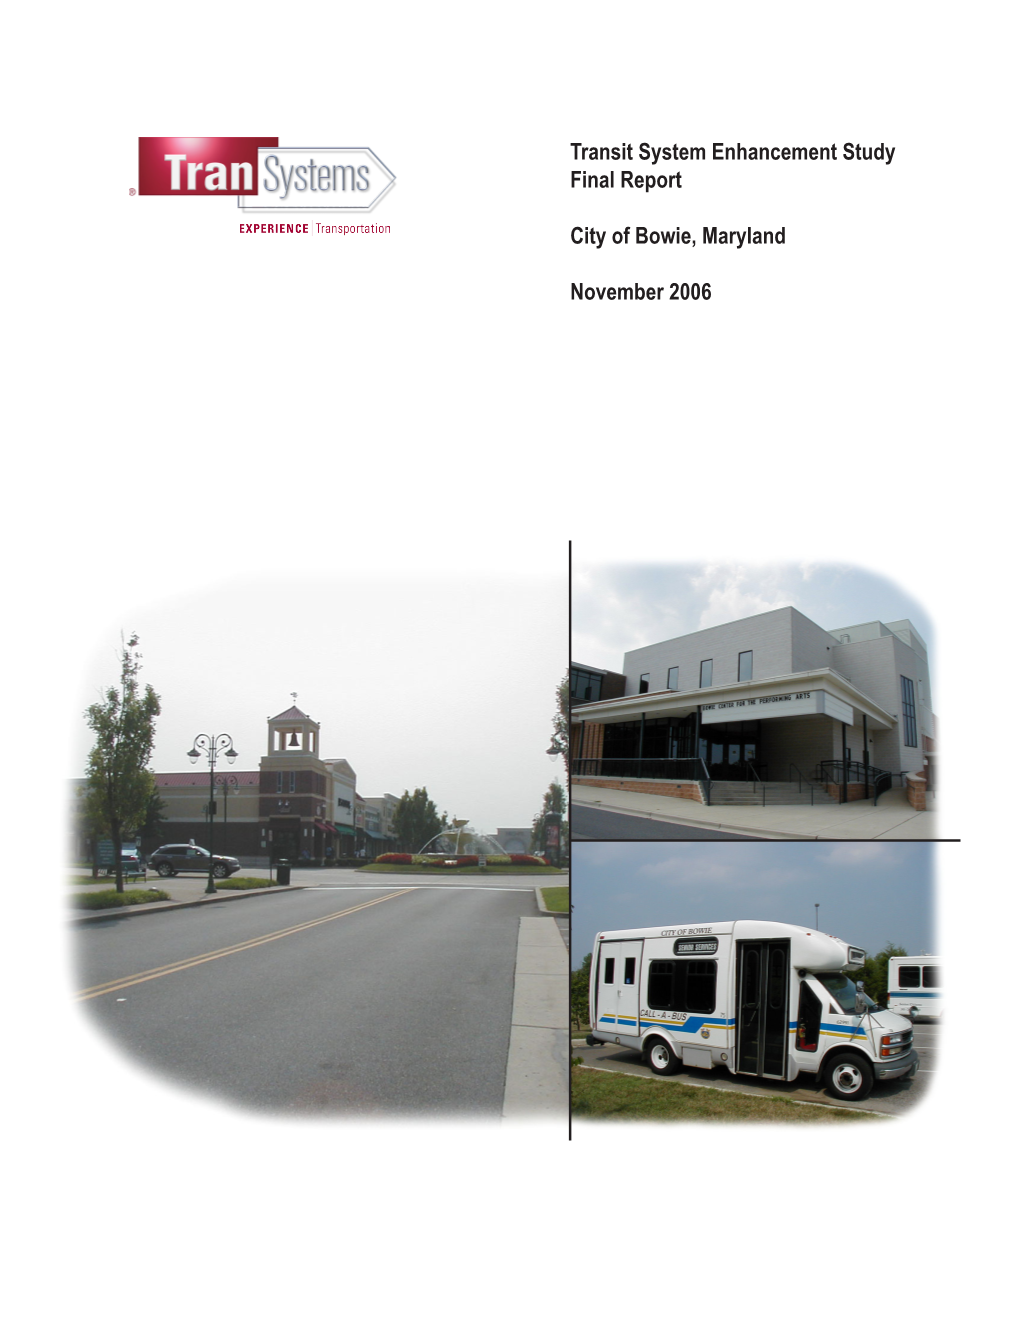 2006 Transit System Enhancement Study